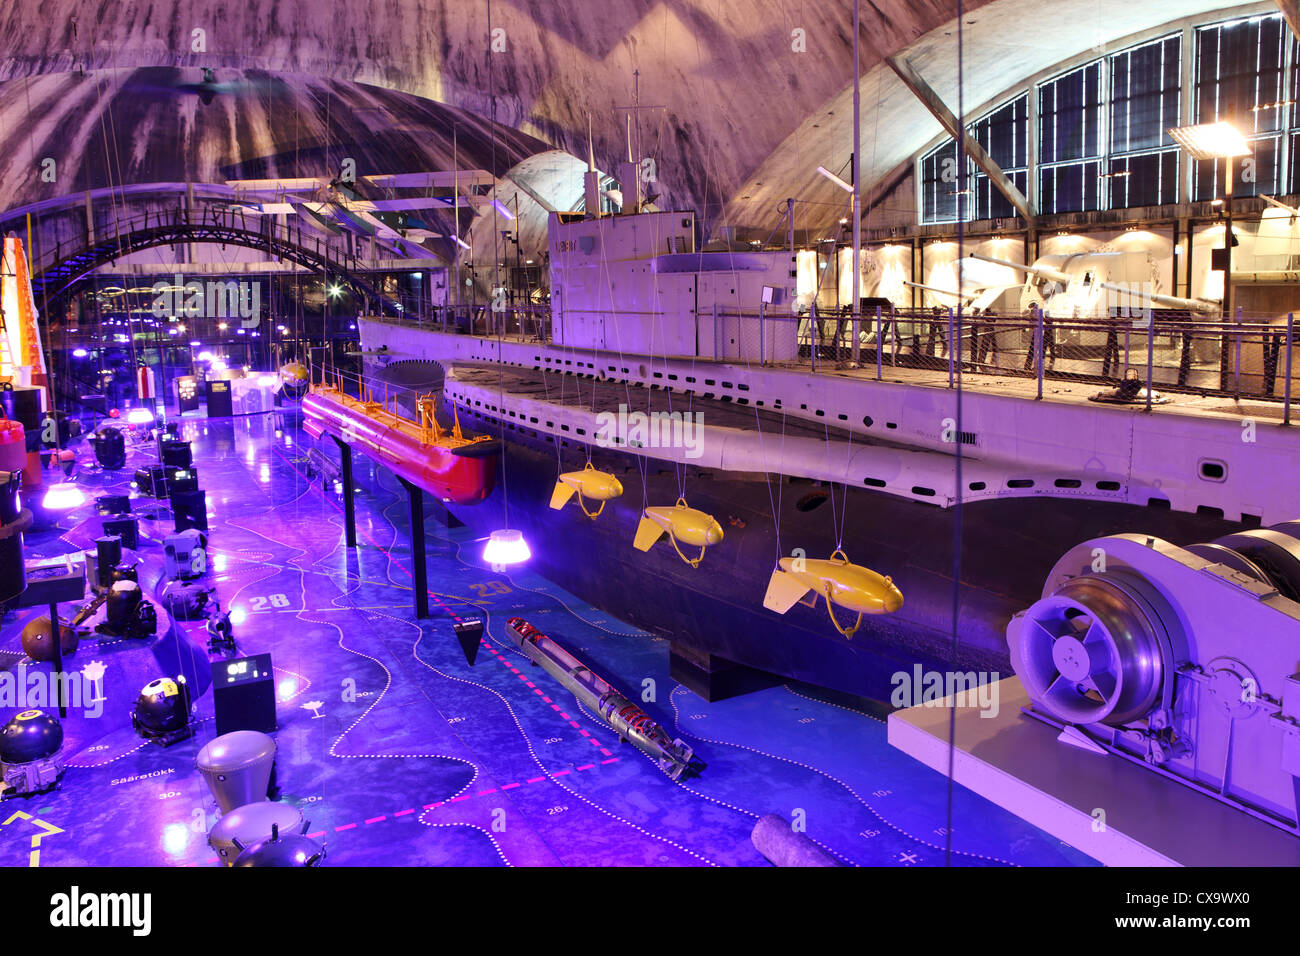 The Lembit submarine in the main hall of the Seaplane Harbour Museum in Tallinn, Estonia. Stock Photo